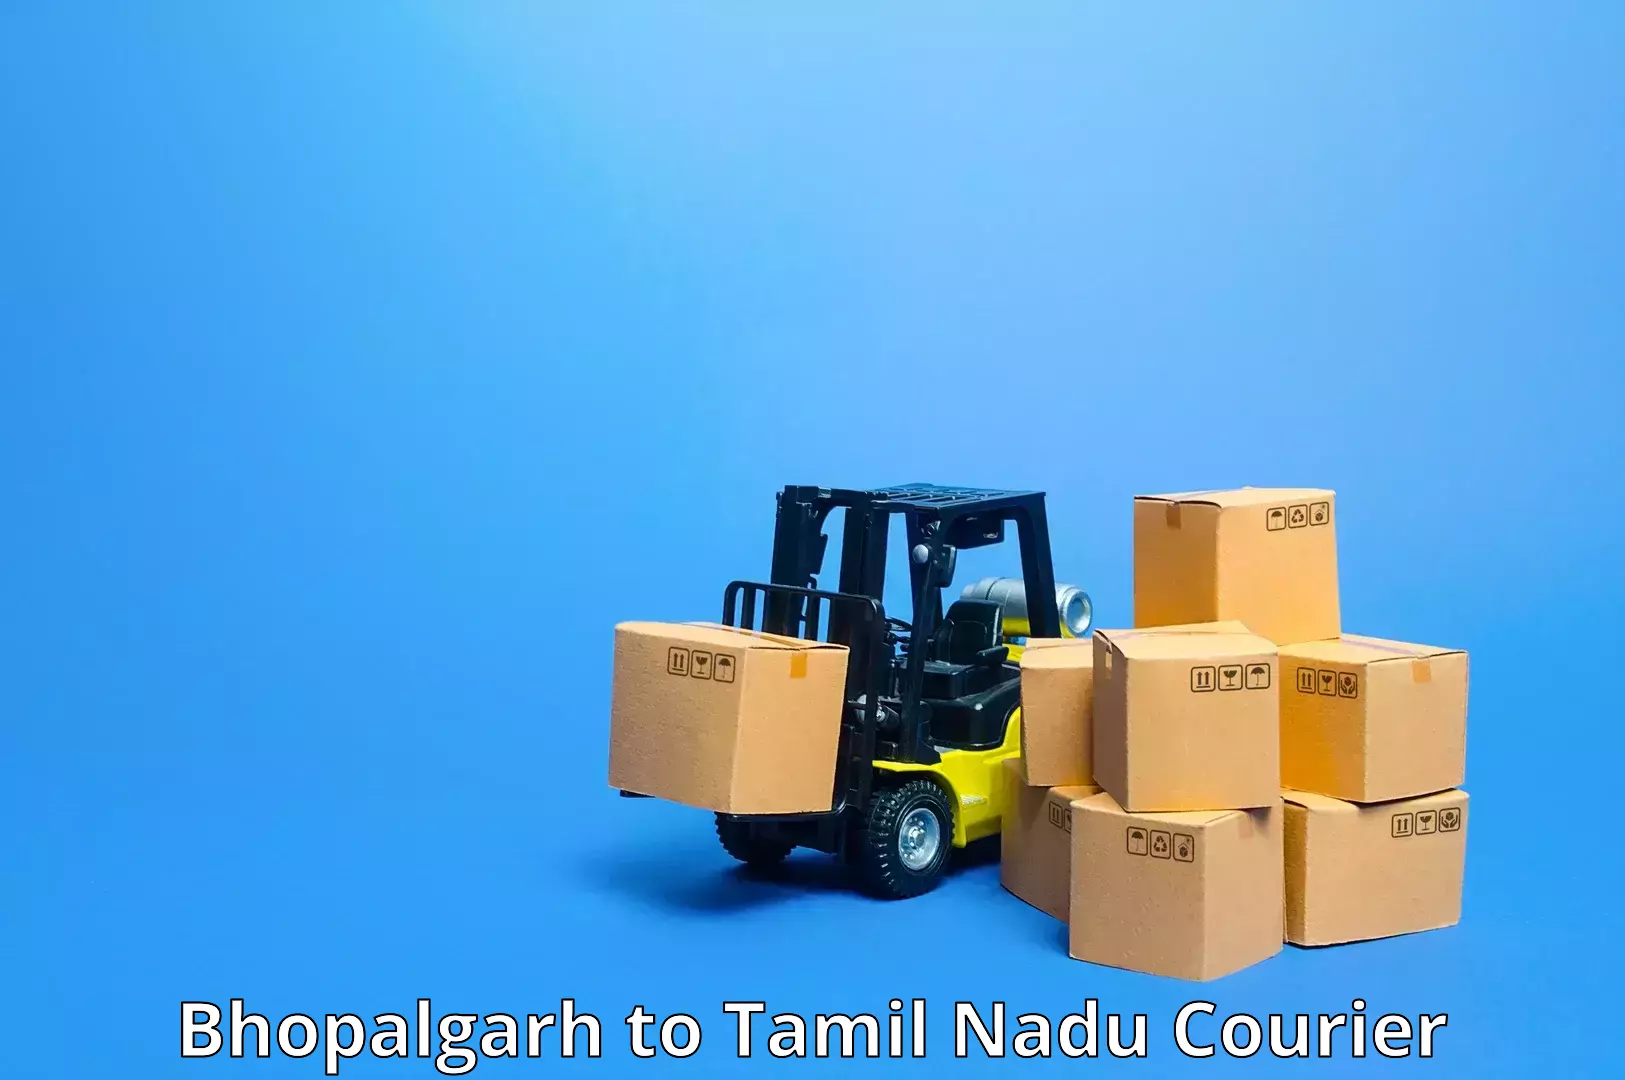 Delivery service partnership Bhopalgarh to Chennai Port